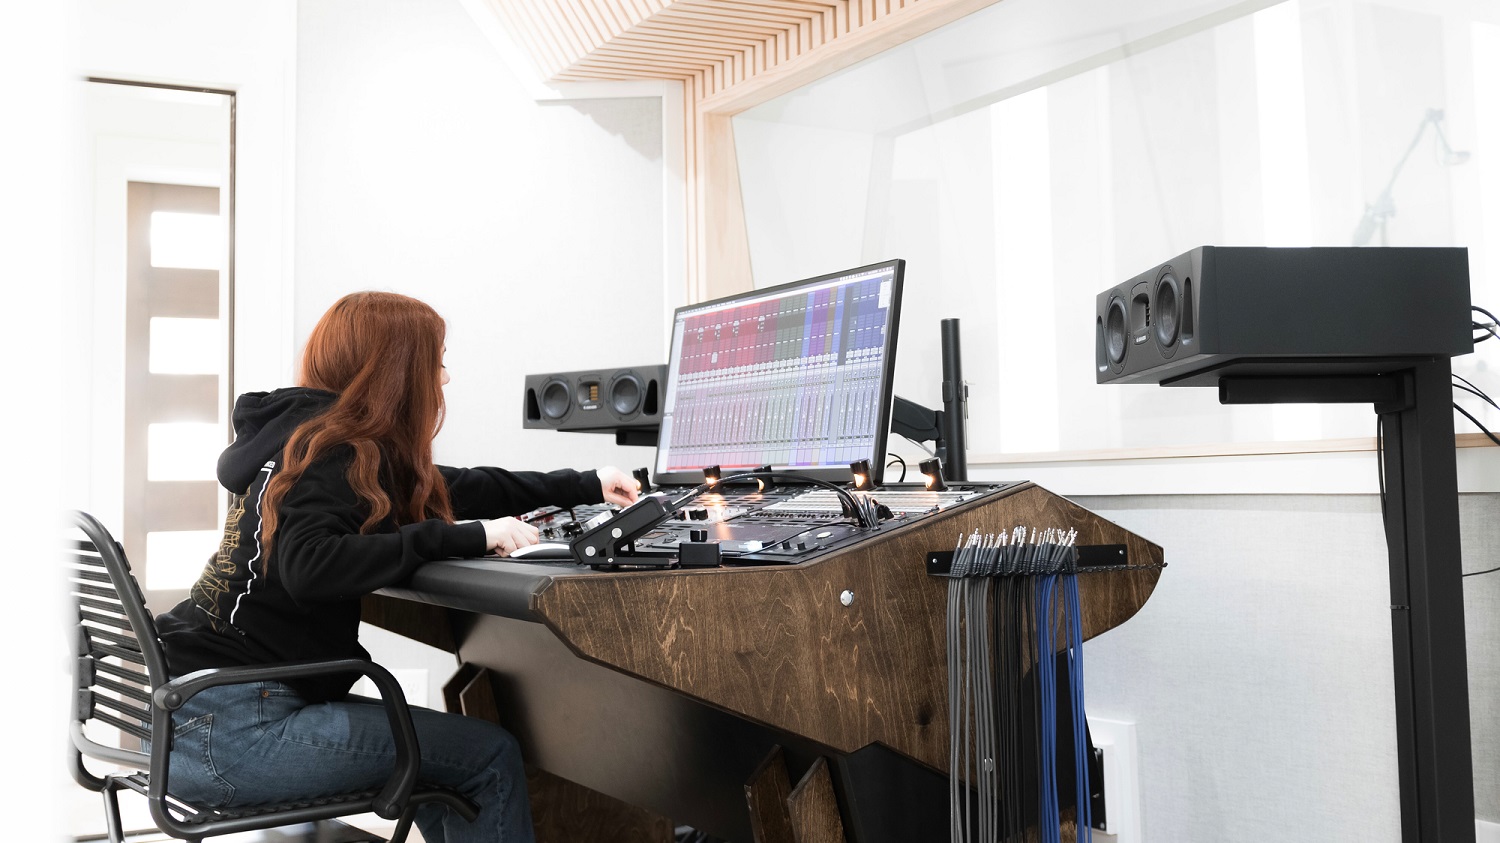 New ADAM Audio A Series studio monitors 